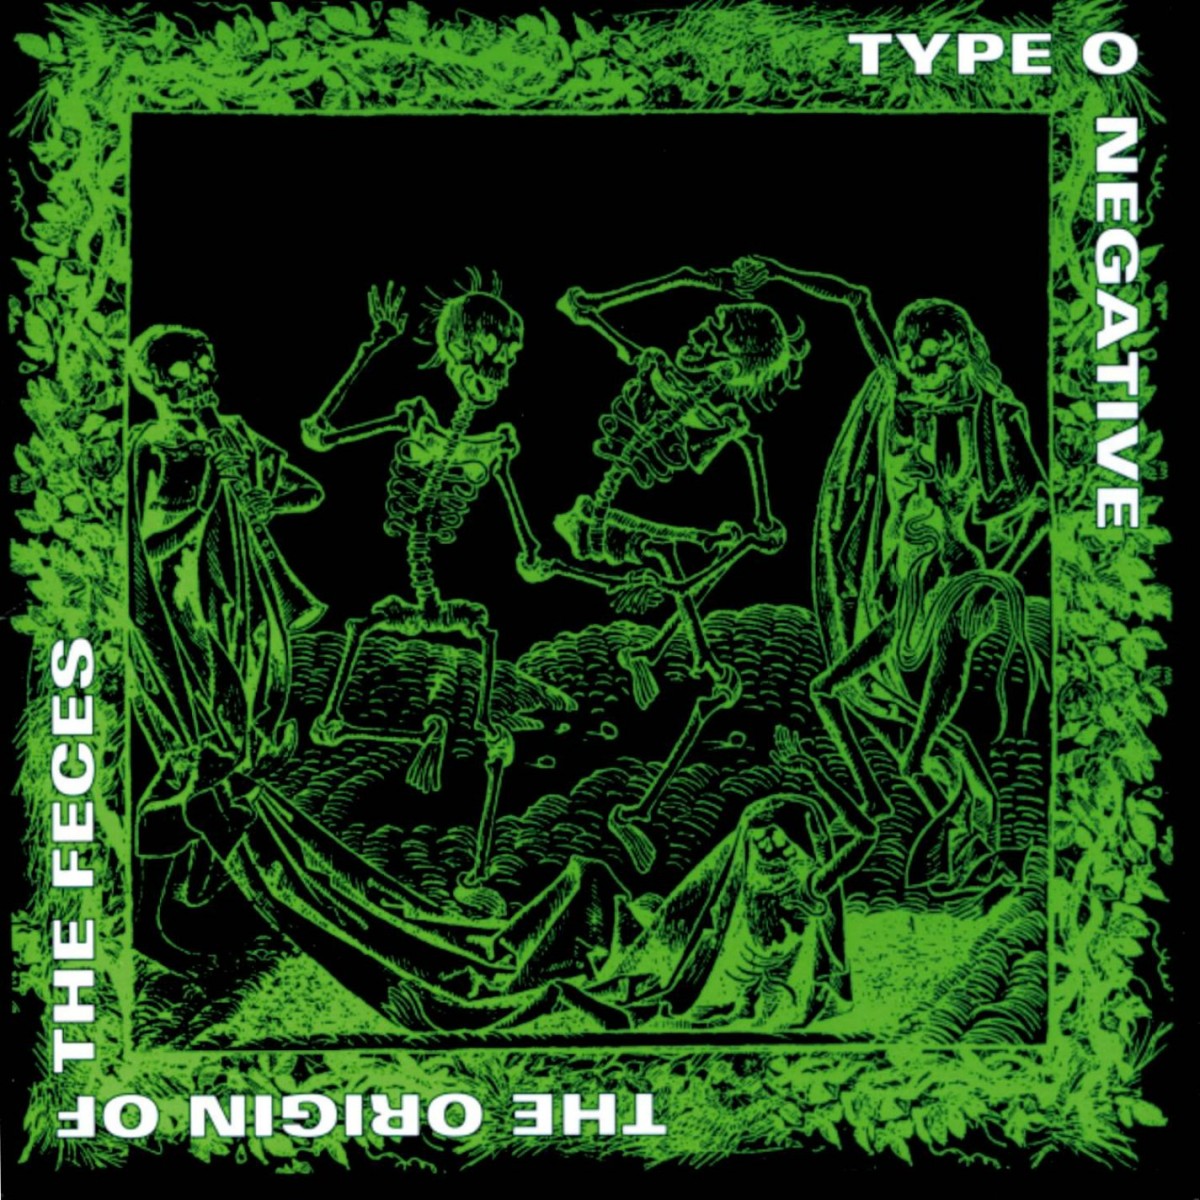 фото Type o negative the origin of the feces (green & black) (2винил) мистерия звука